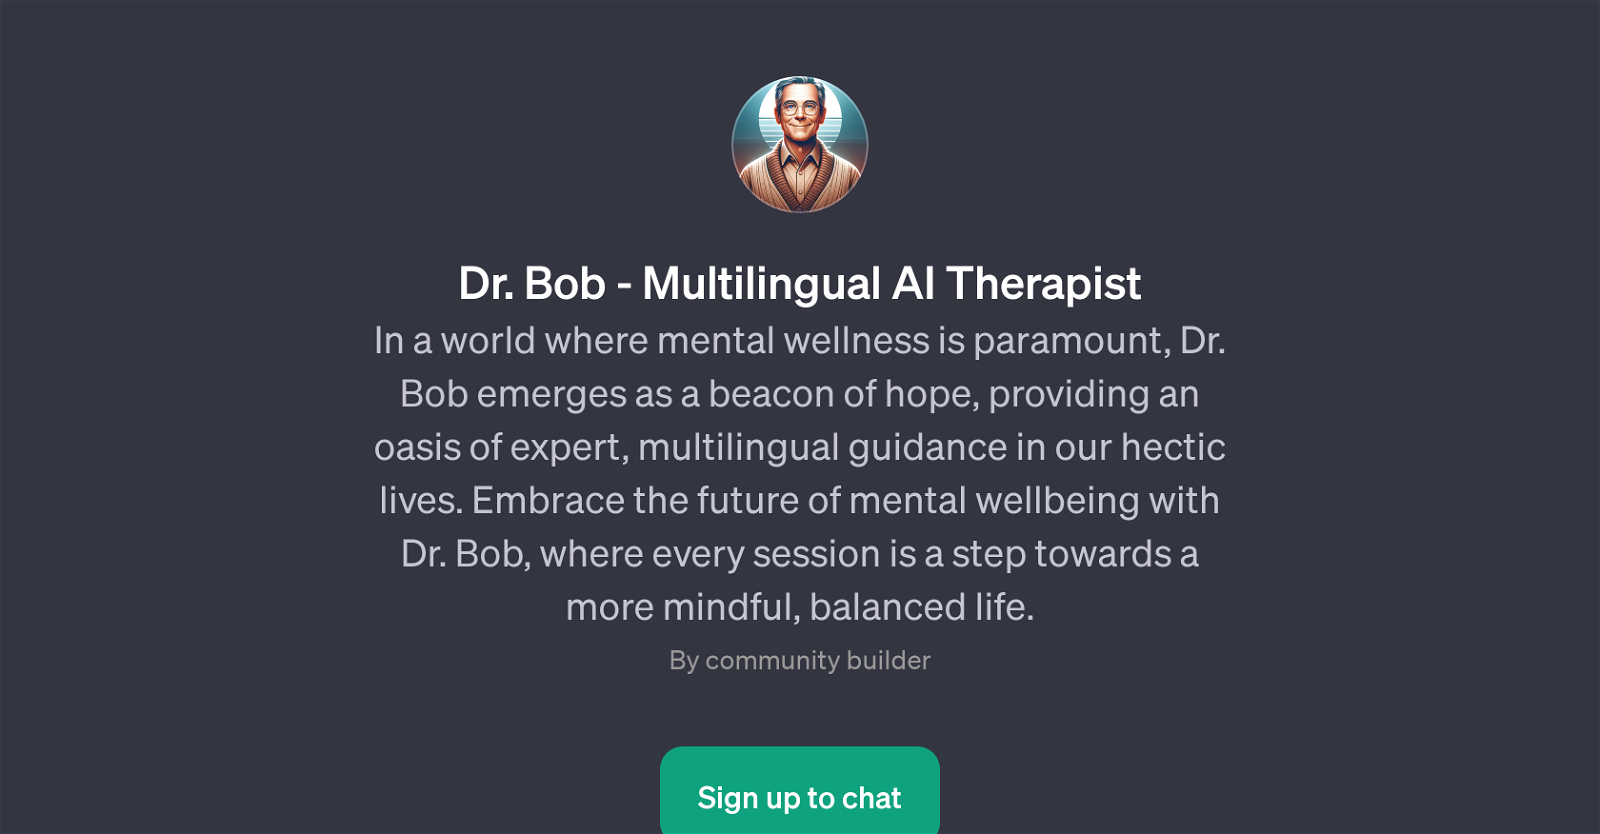 Dr. Bob - Multilingual AI Therapist website